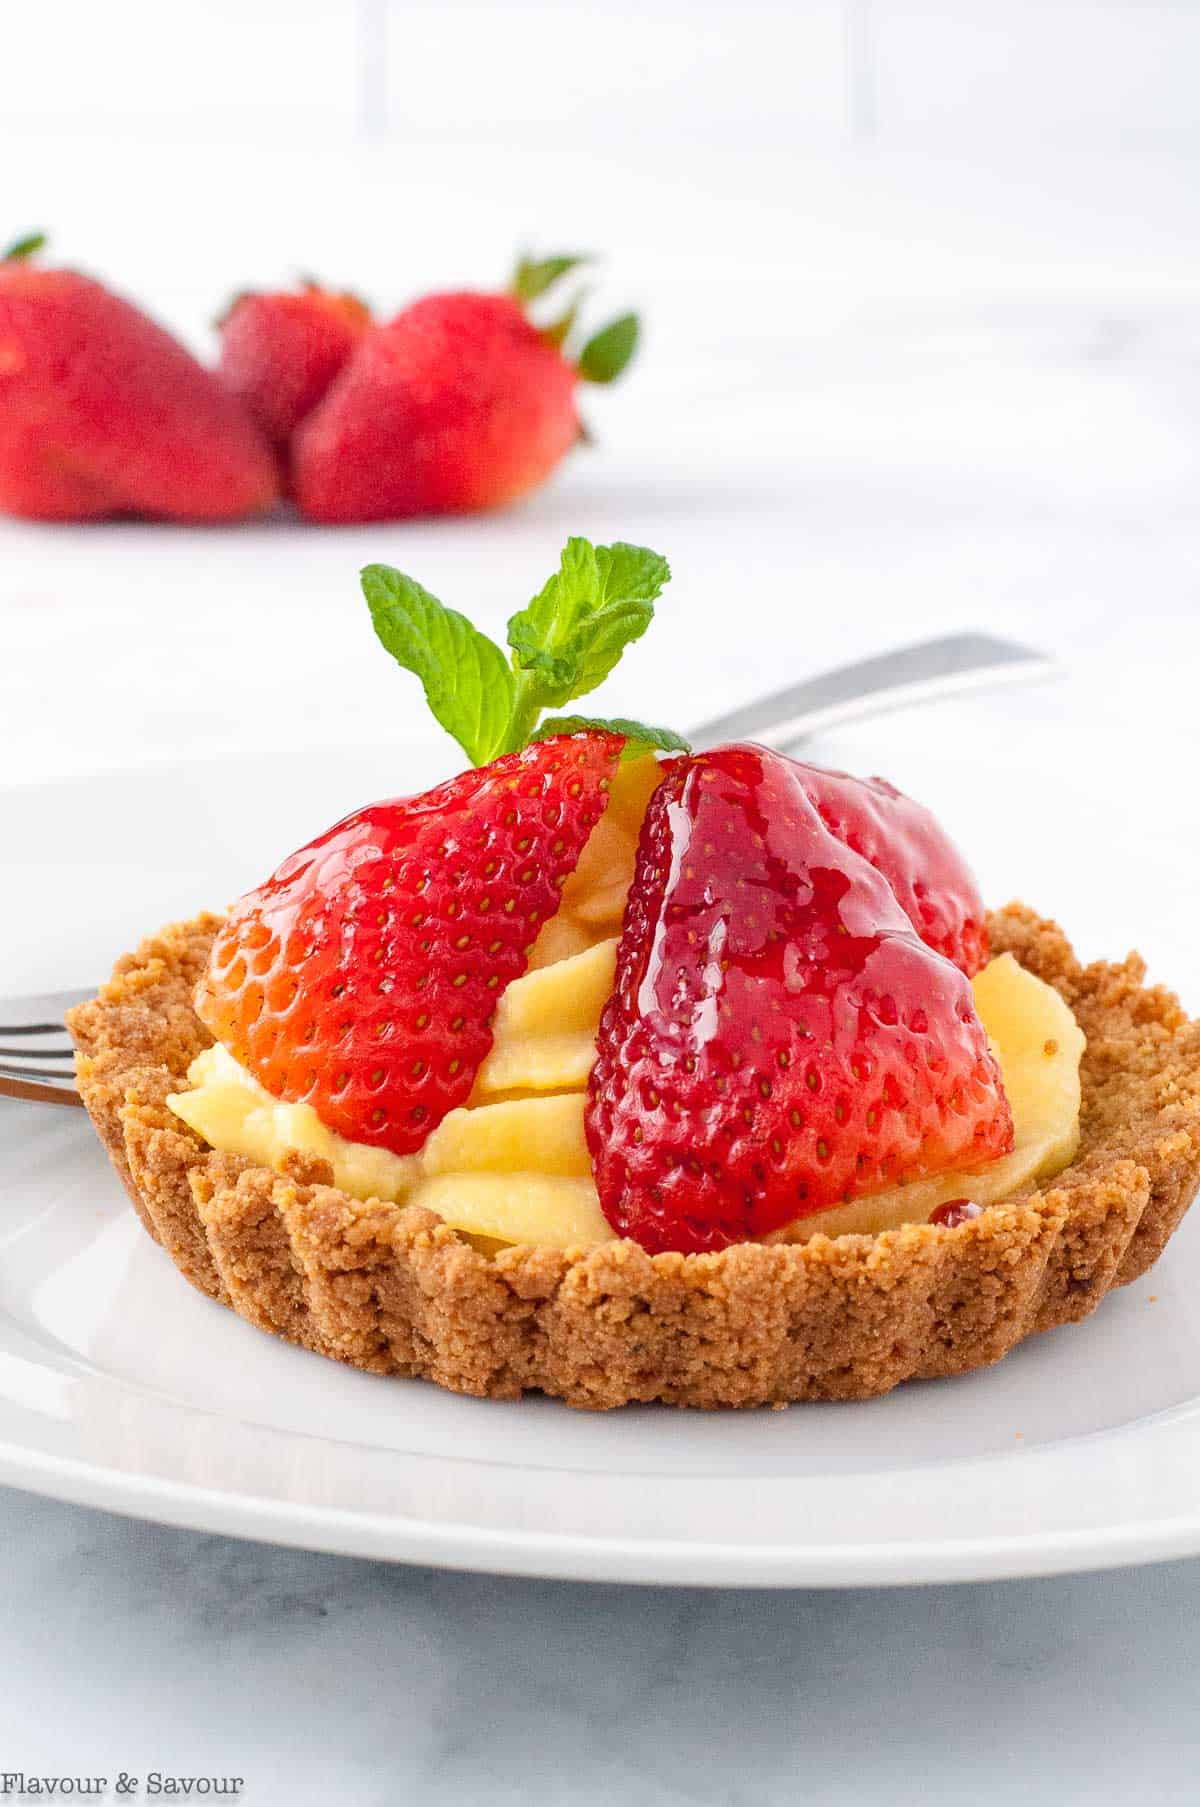 Strawberry tartlet with vanilla pastry cream, slice strawberries and a gluten-free graham cracker crust.